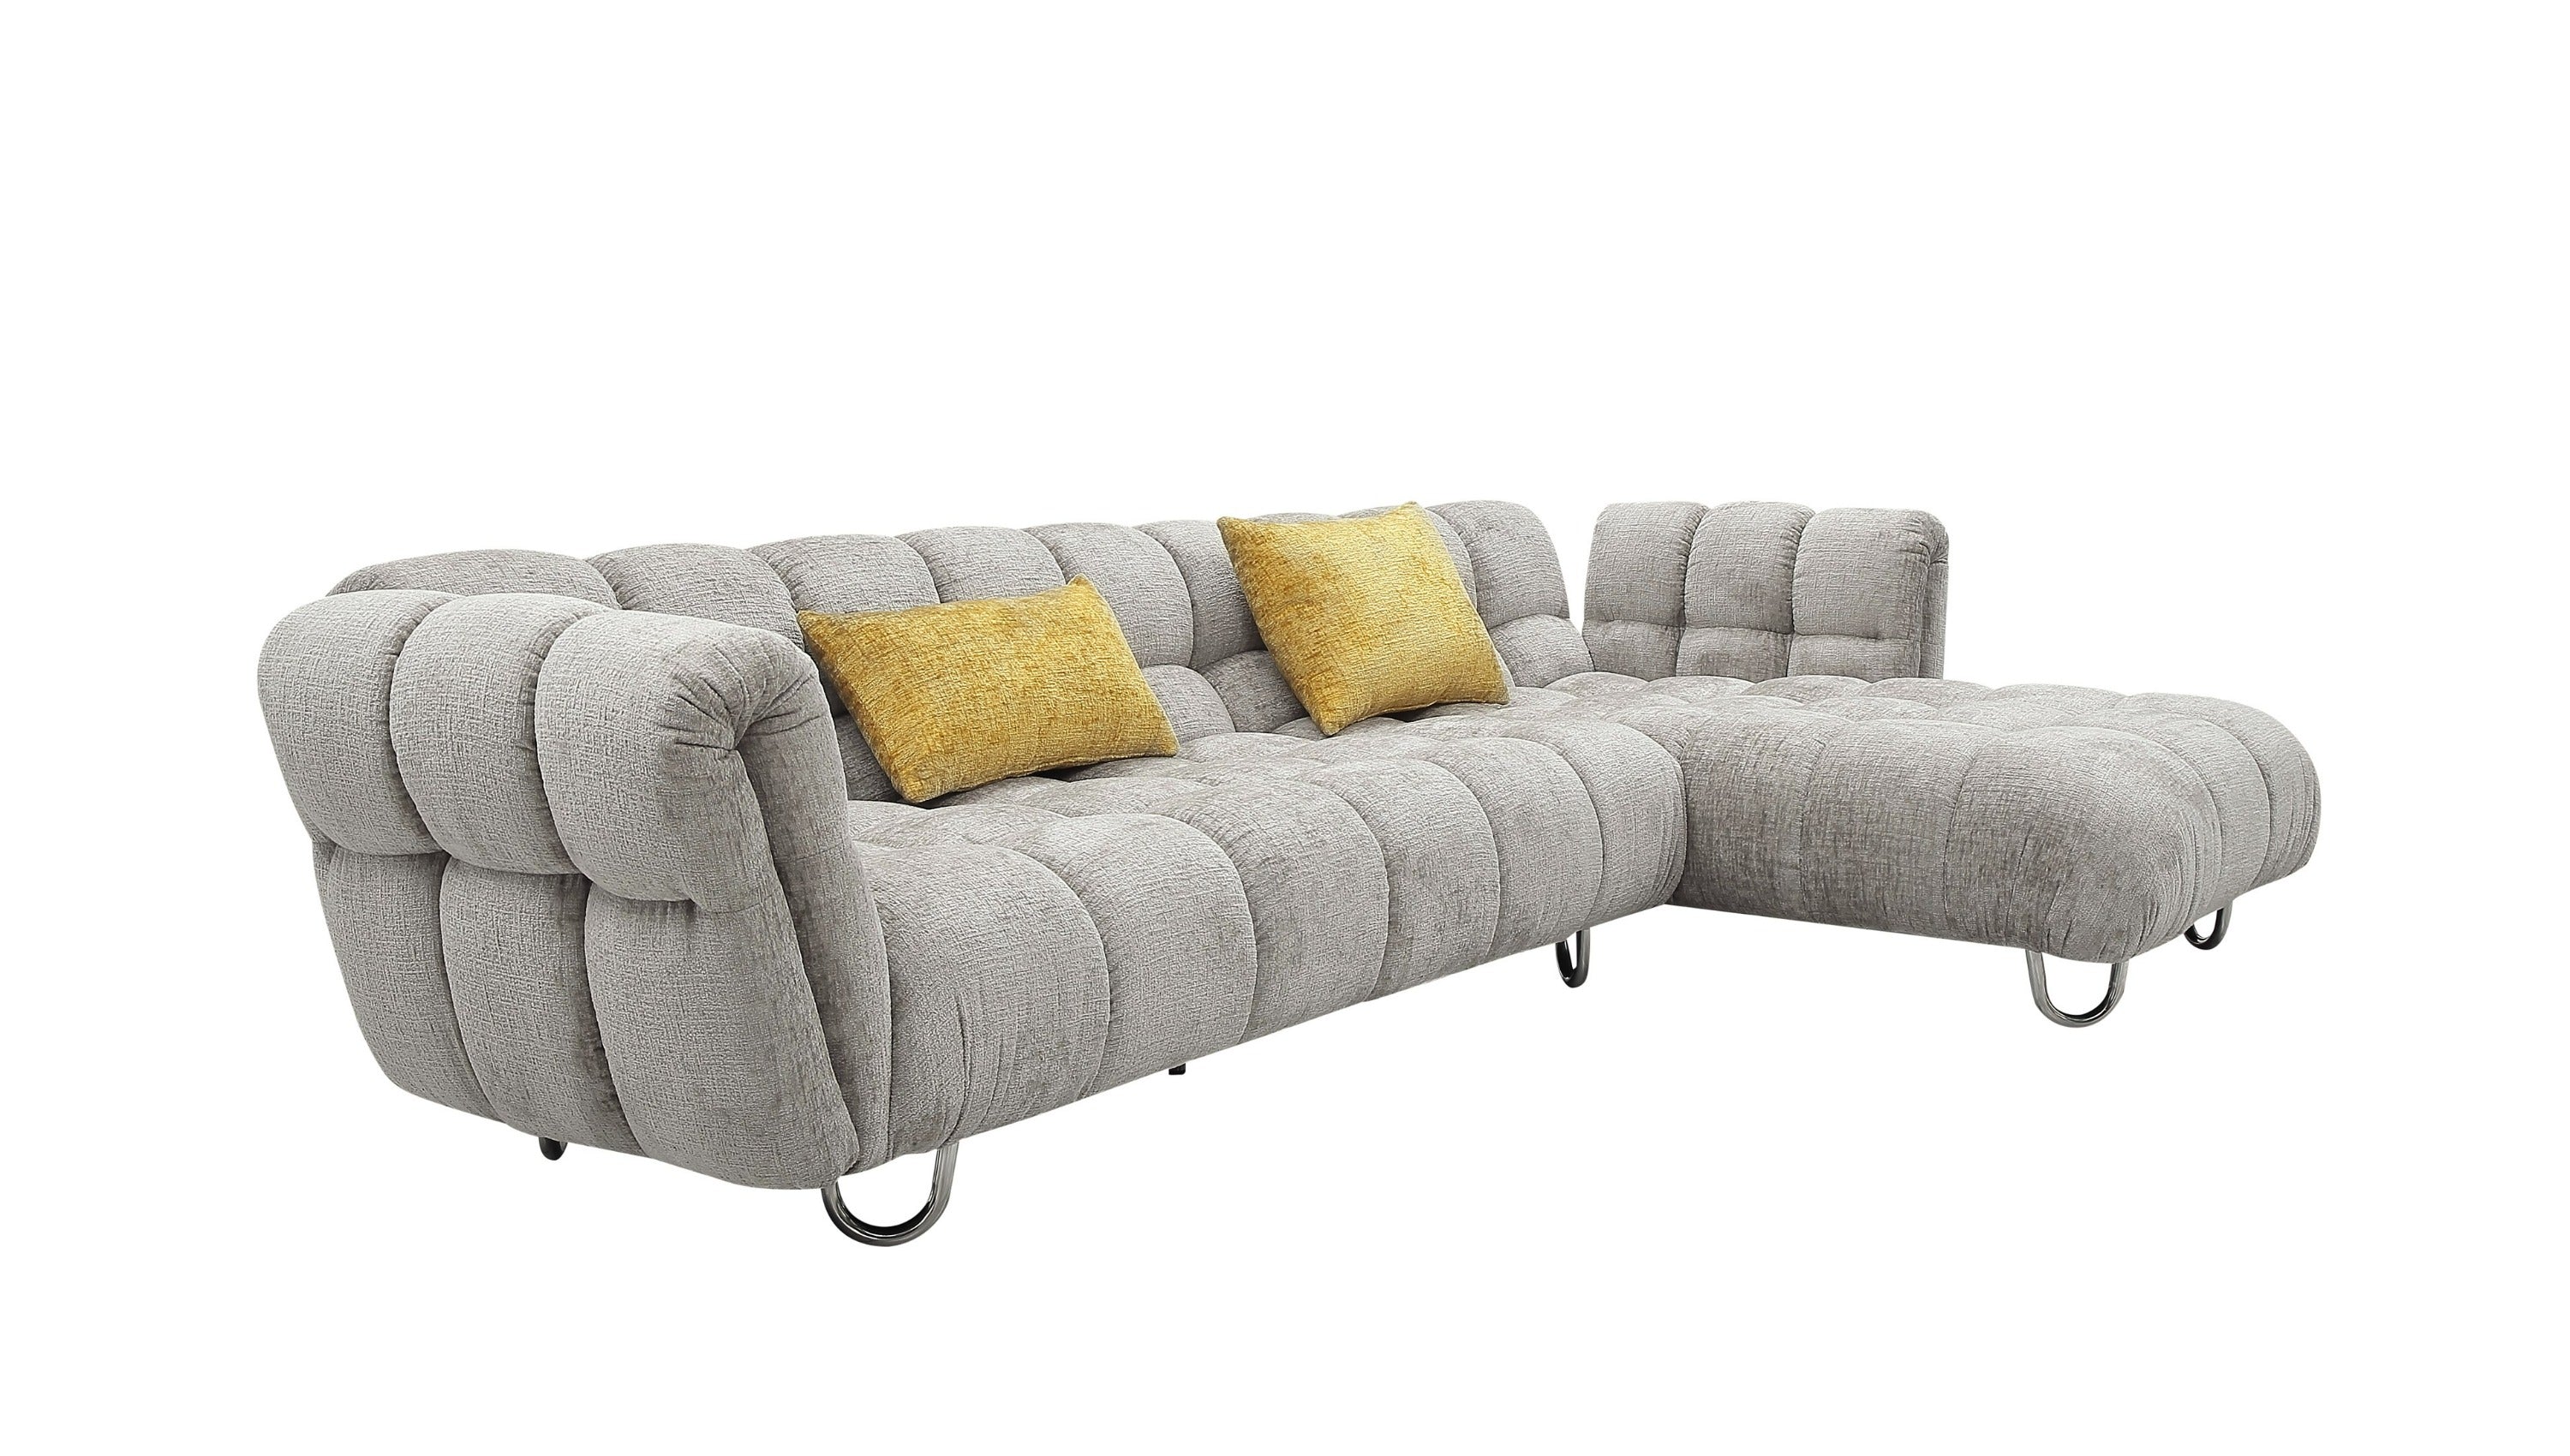 Divani Casa Jacinda - Modern Fabric Right Facing Sectional Sofa with 2 Pillows-Sectional Sofa-VIG-Wall2Wall Furnishings